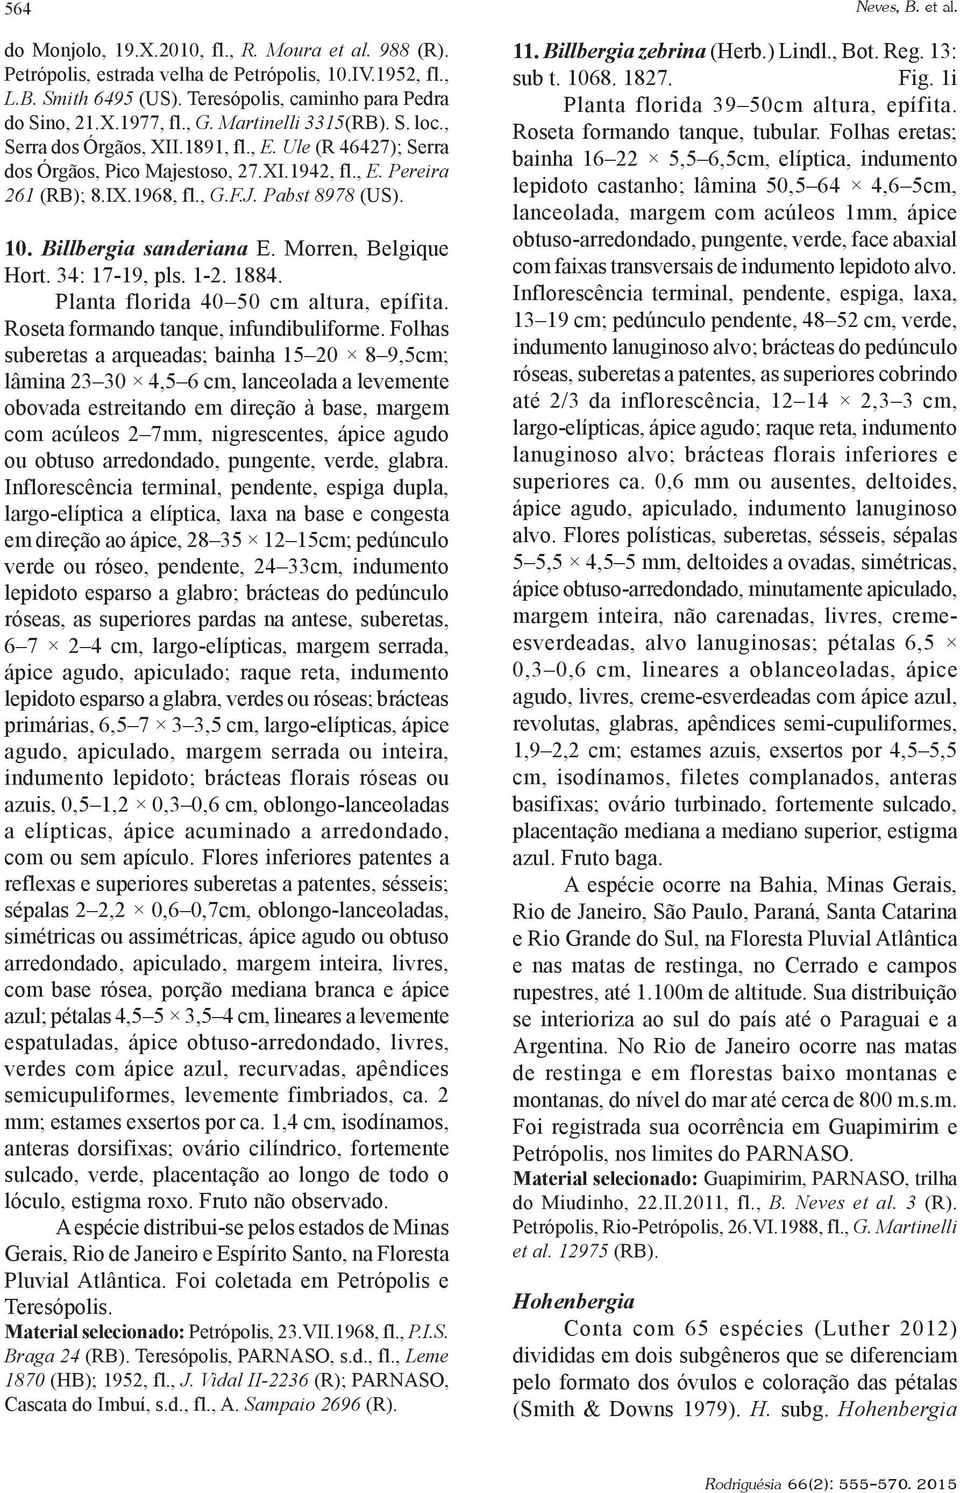 10. Billbergia sanderiana E. Morren, Belgique Hort. 34: 17-19, pls. 1-2. 1884. Planta florida 40 50 cm altura, epífita. Roseta formando tanque, infundibuliforme.